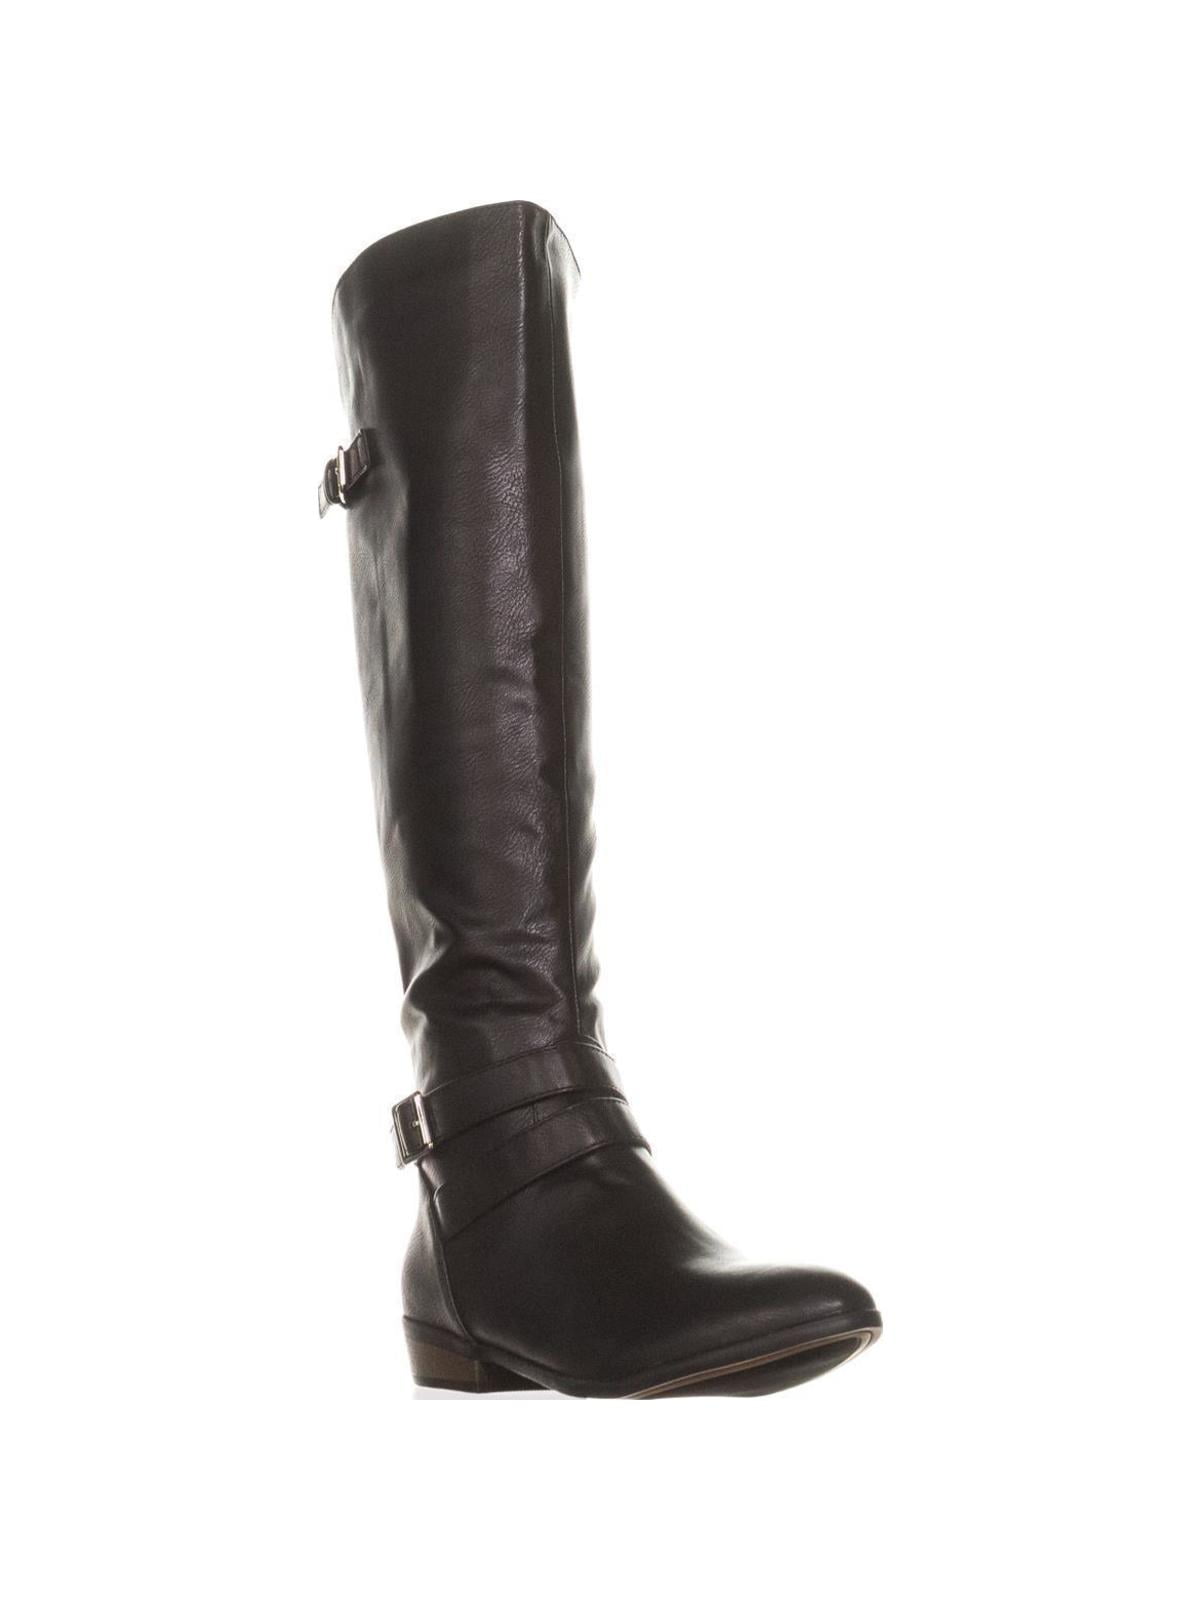 MG35 Carleigh Knee High Boots, Black | Walmart Canada